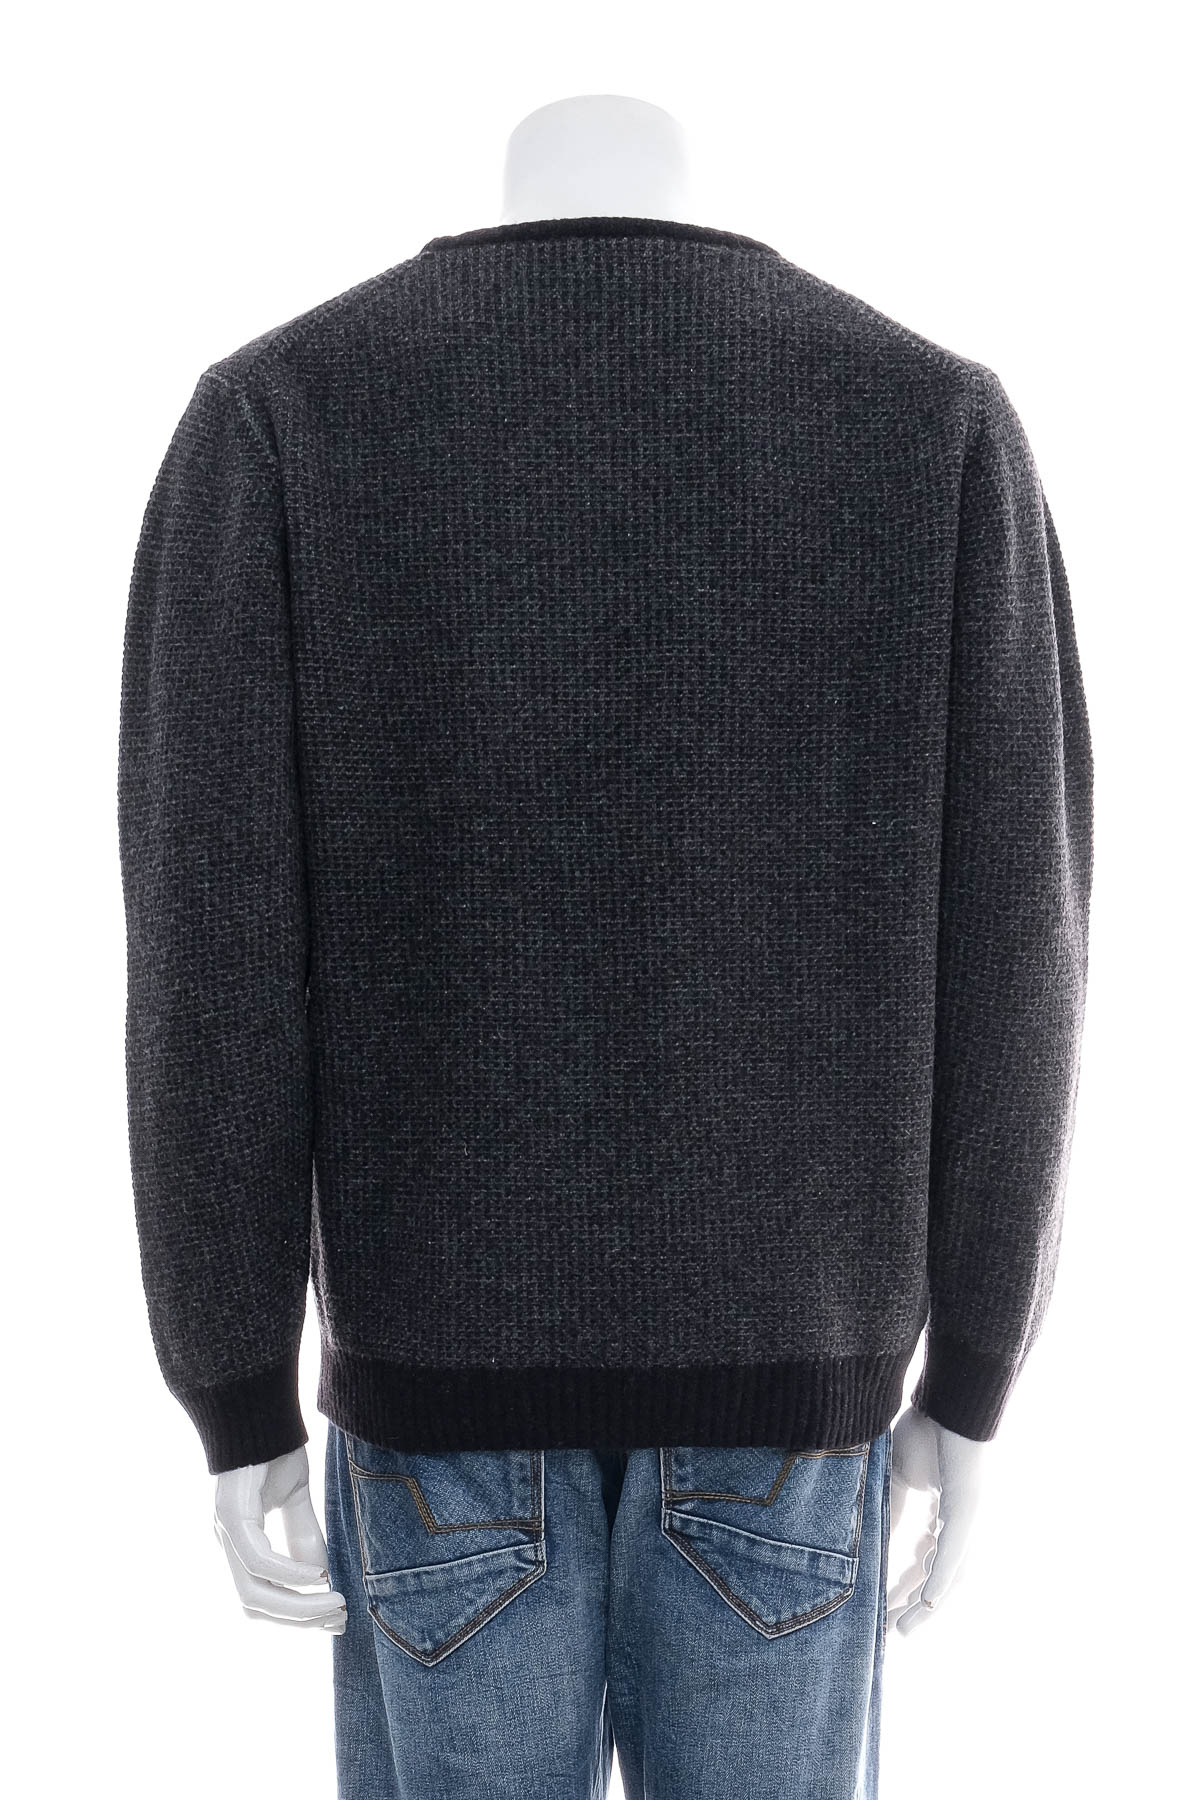 Men's sweater - Kitaro - 1